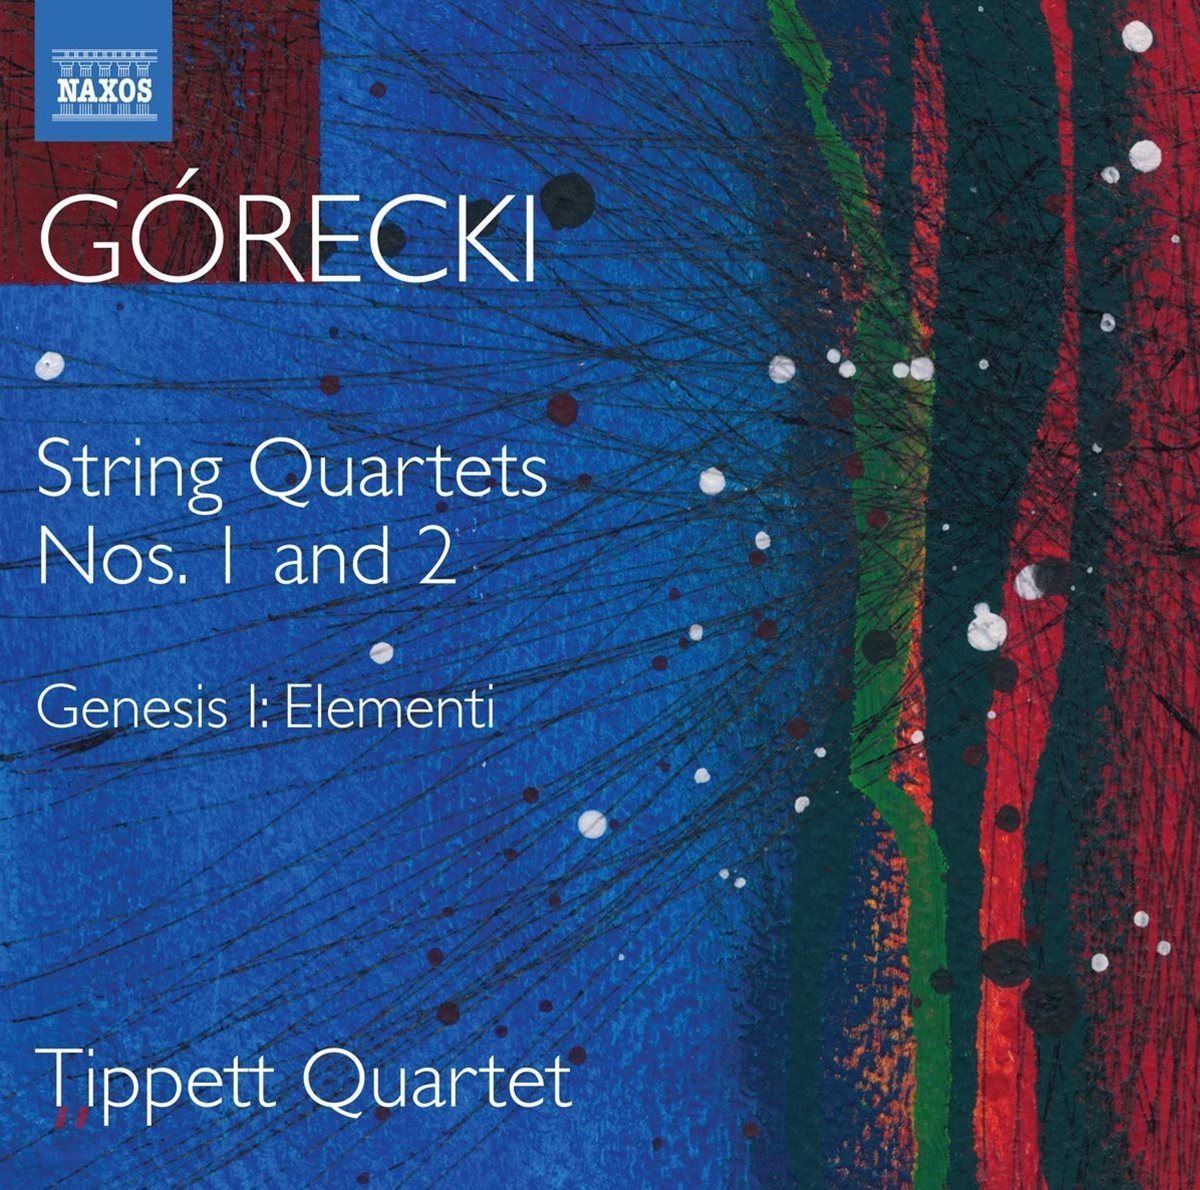 Tippett Quartet 고레츠키: 현악 사중주 1번 '이미 황혼', 2번 '환상곡 풍으로', 제네시스 I '원소' (Gorecki: Complete String Quartets, Genesis I)